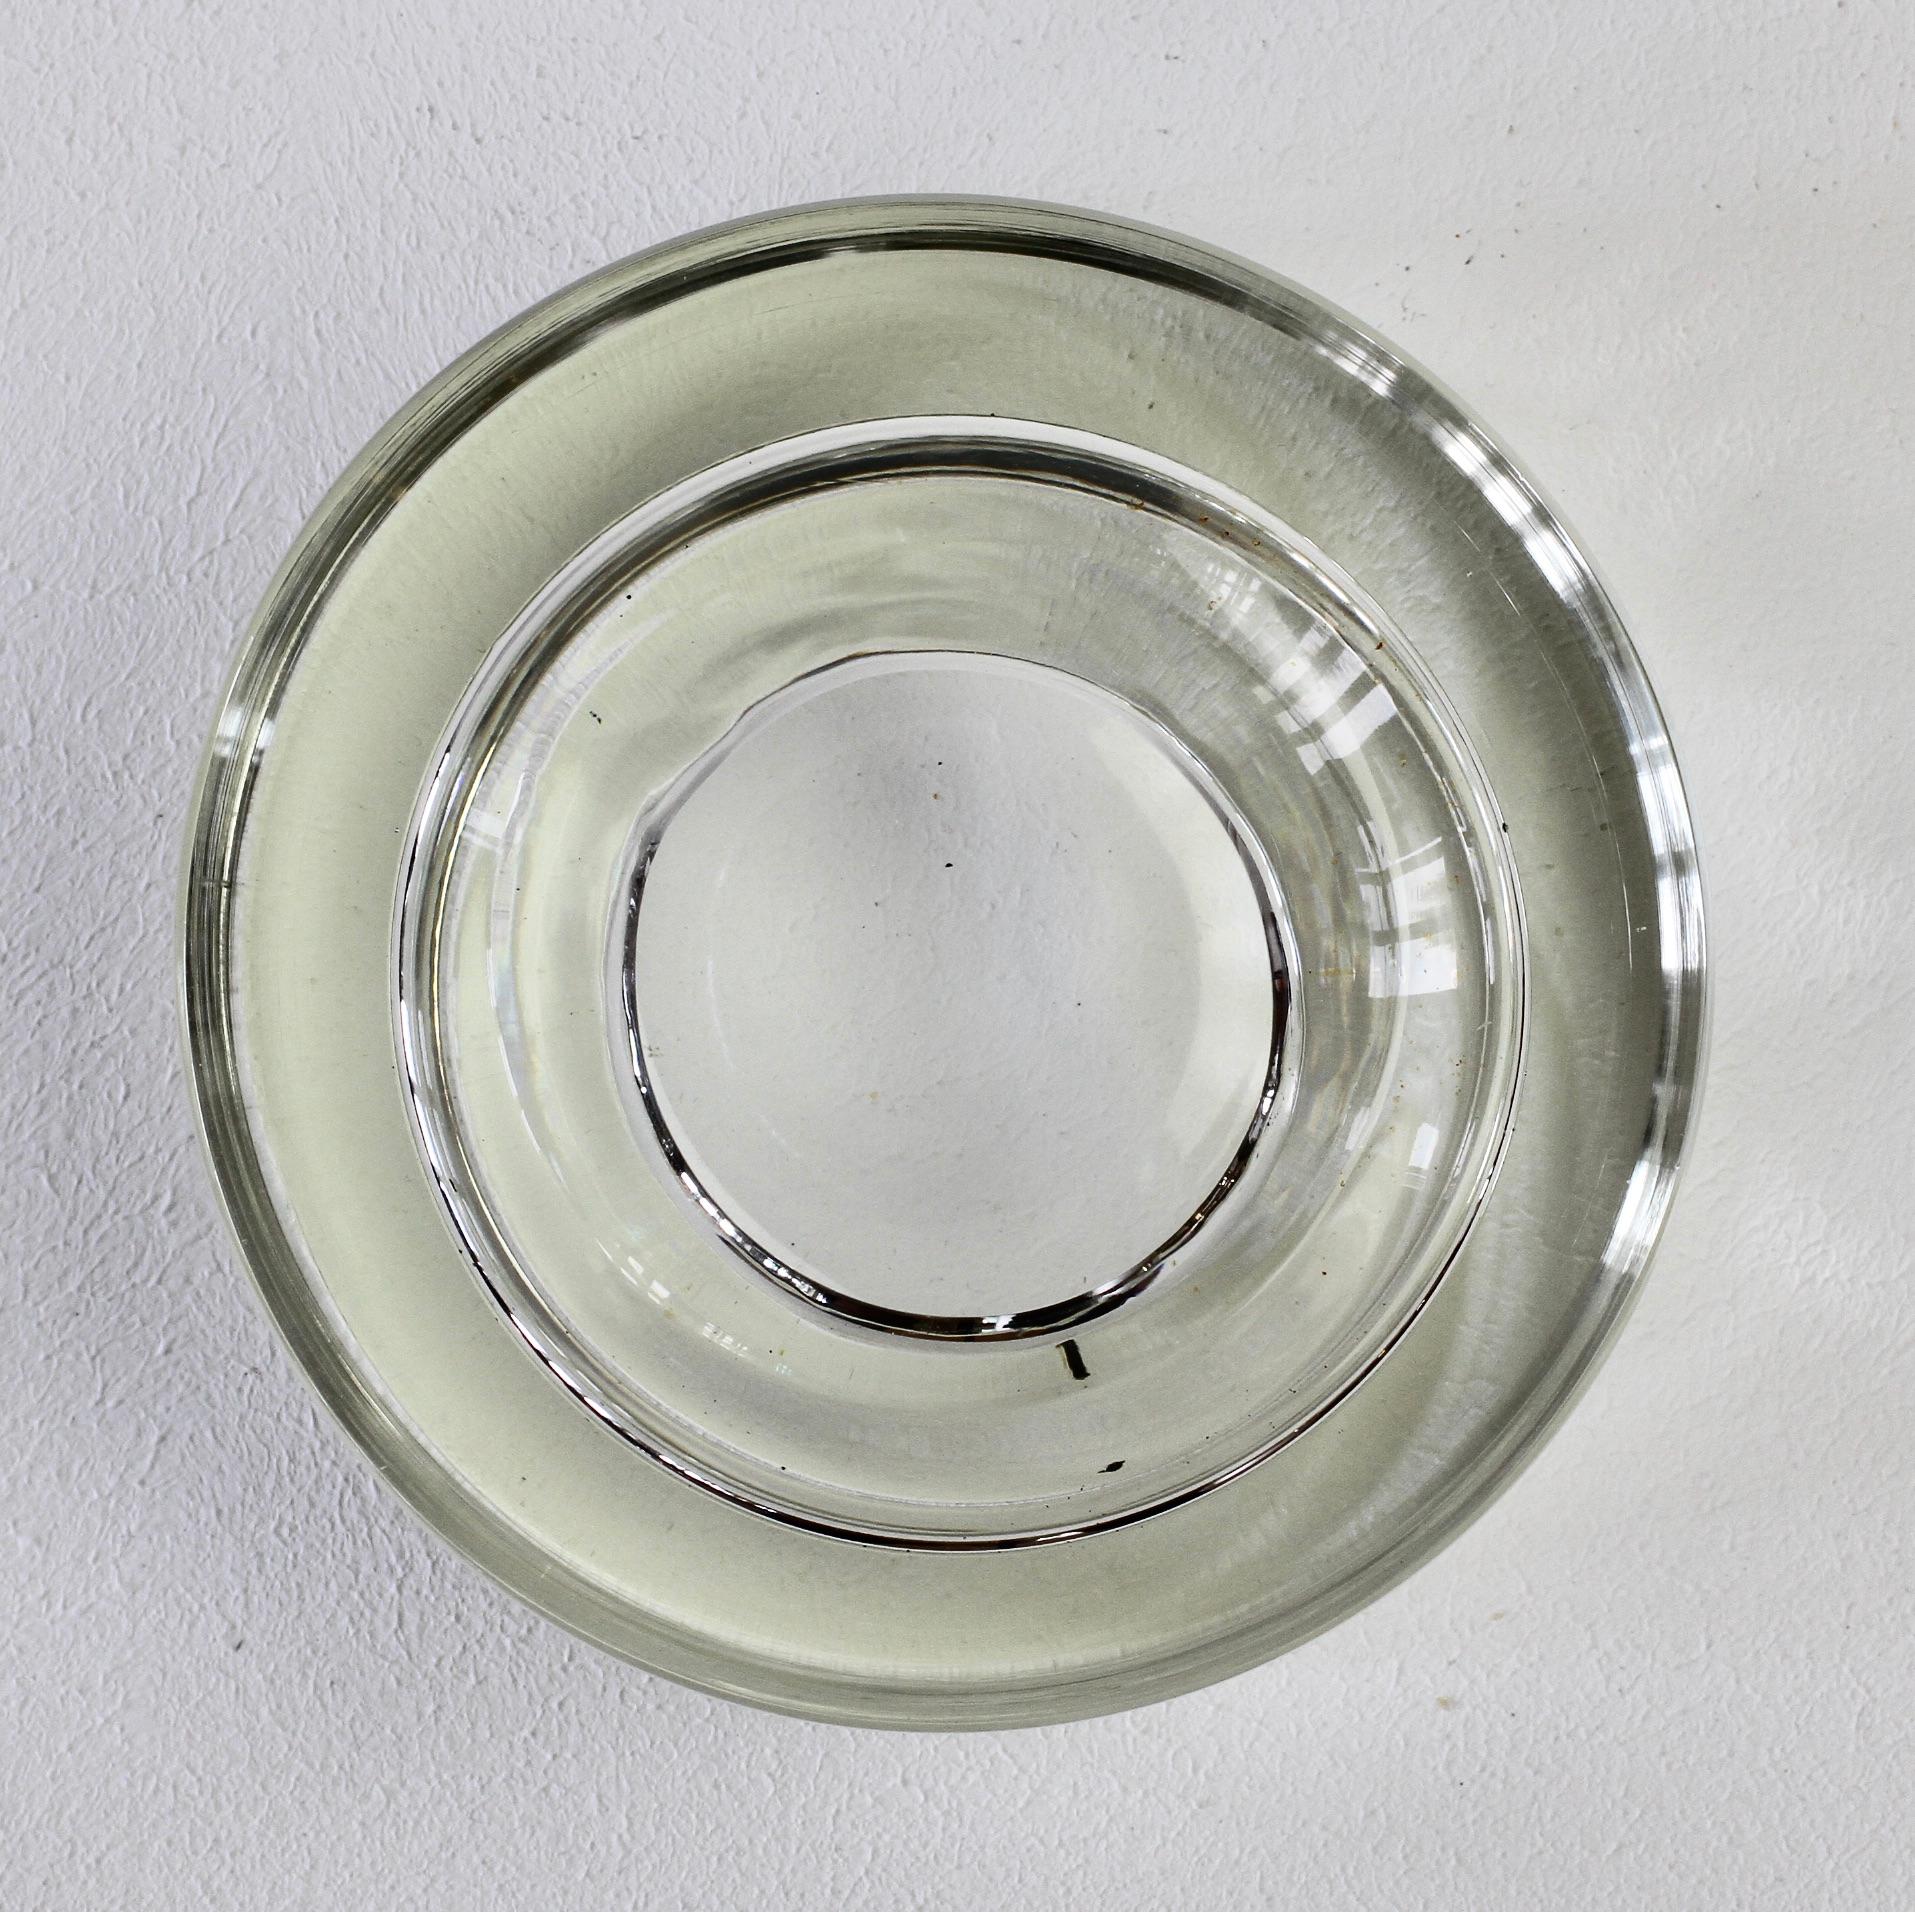 Antonio Da Ros Vintage Italian Murano Clear Sommerso Glass Bowl, Dish or Ashtray For Sale 3